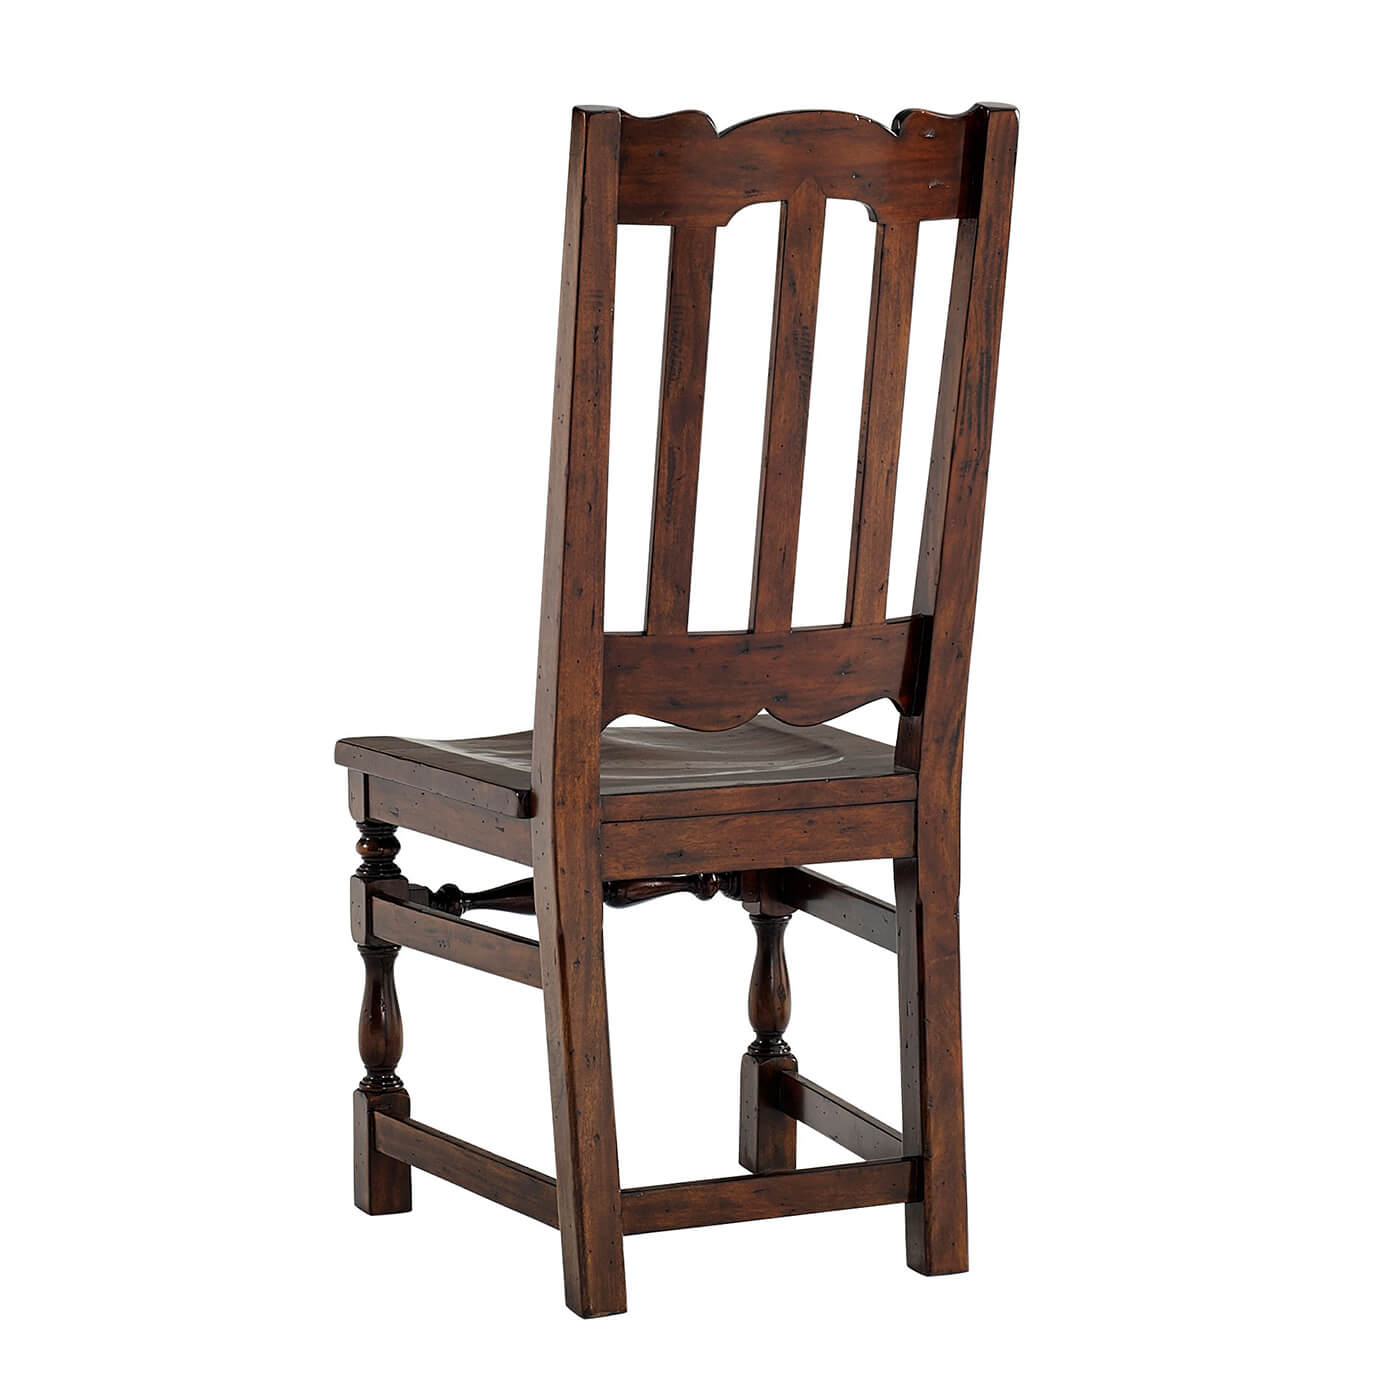 Early English Style Side Chairs - English Georgian America